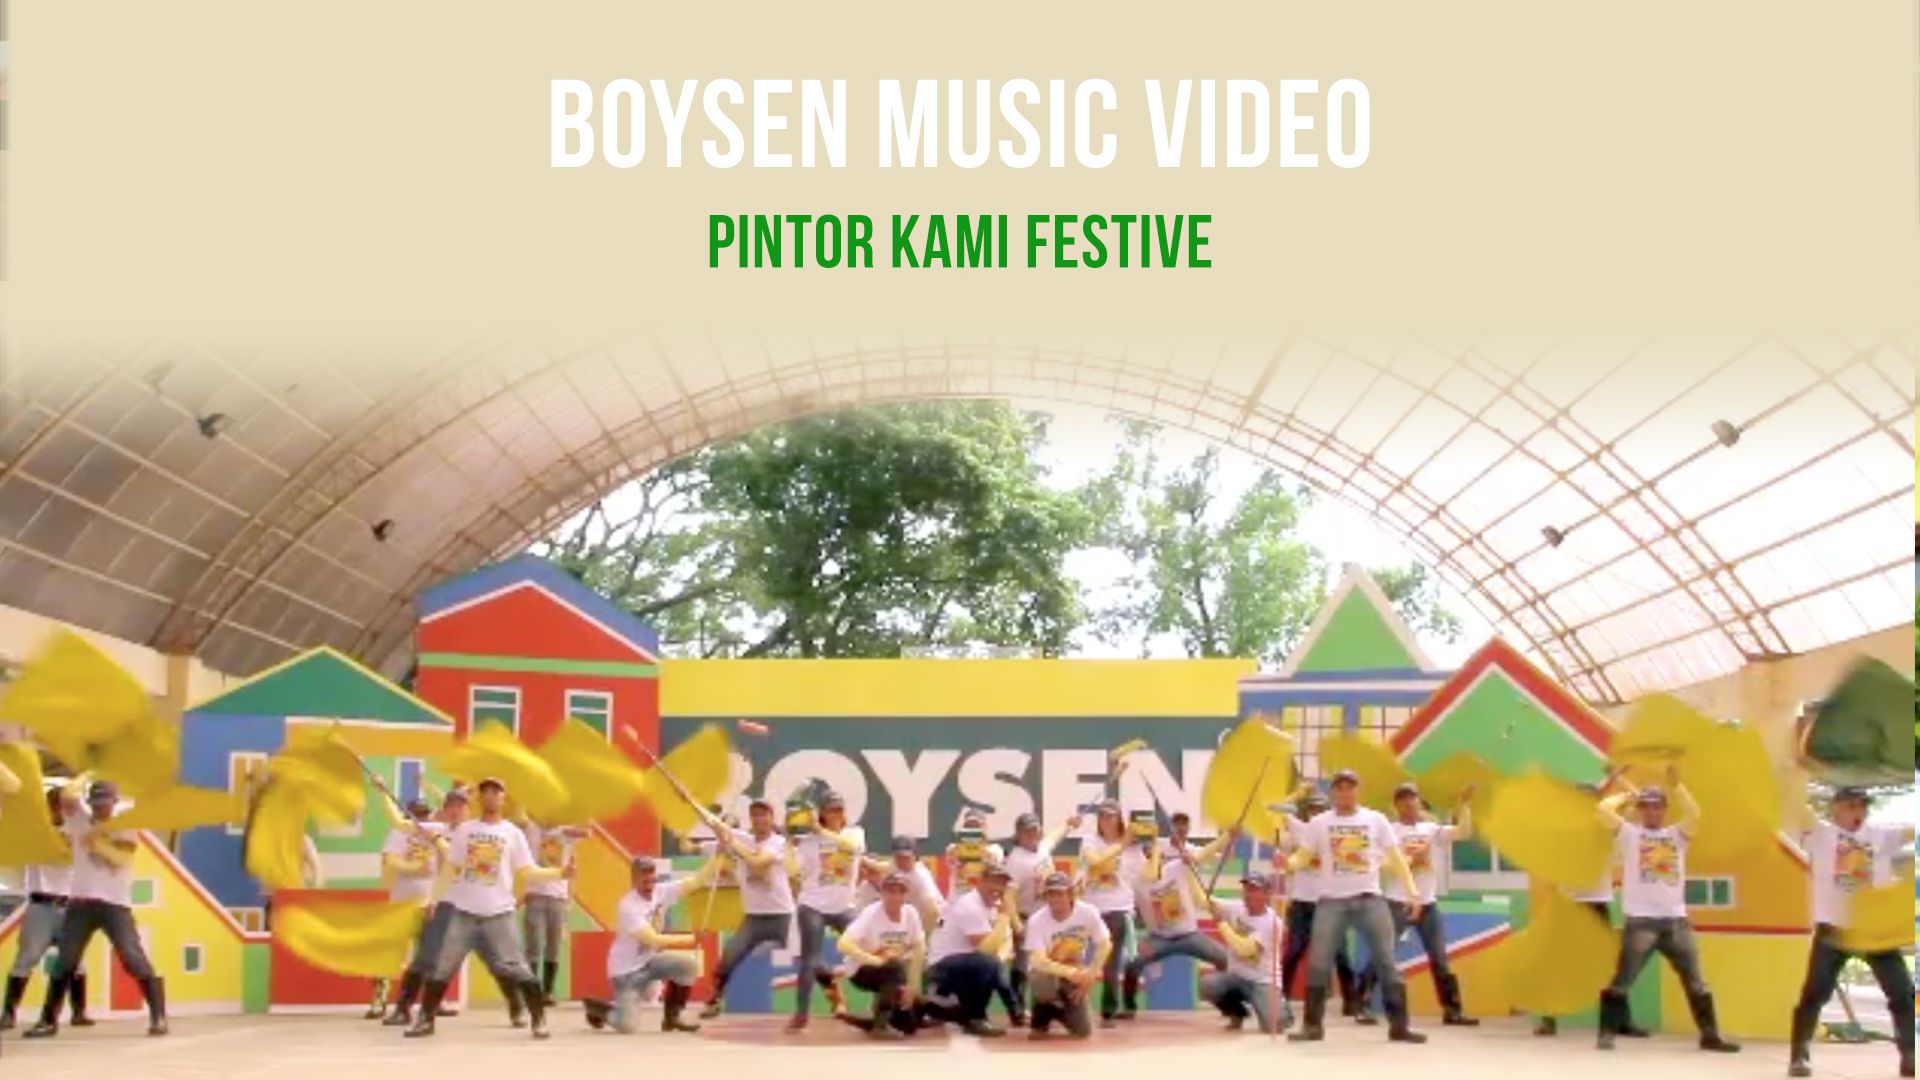 BOYSEN MV “Pintor Kami” Festive